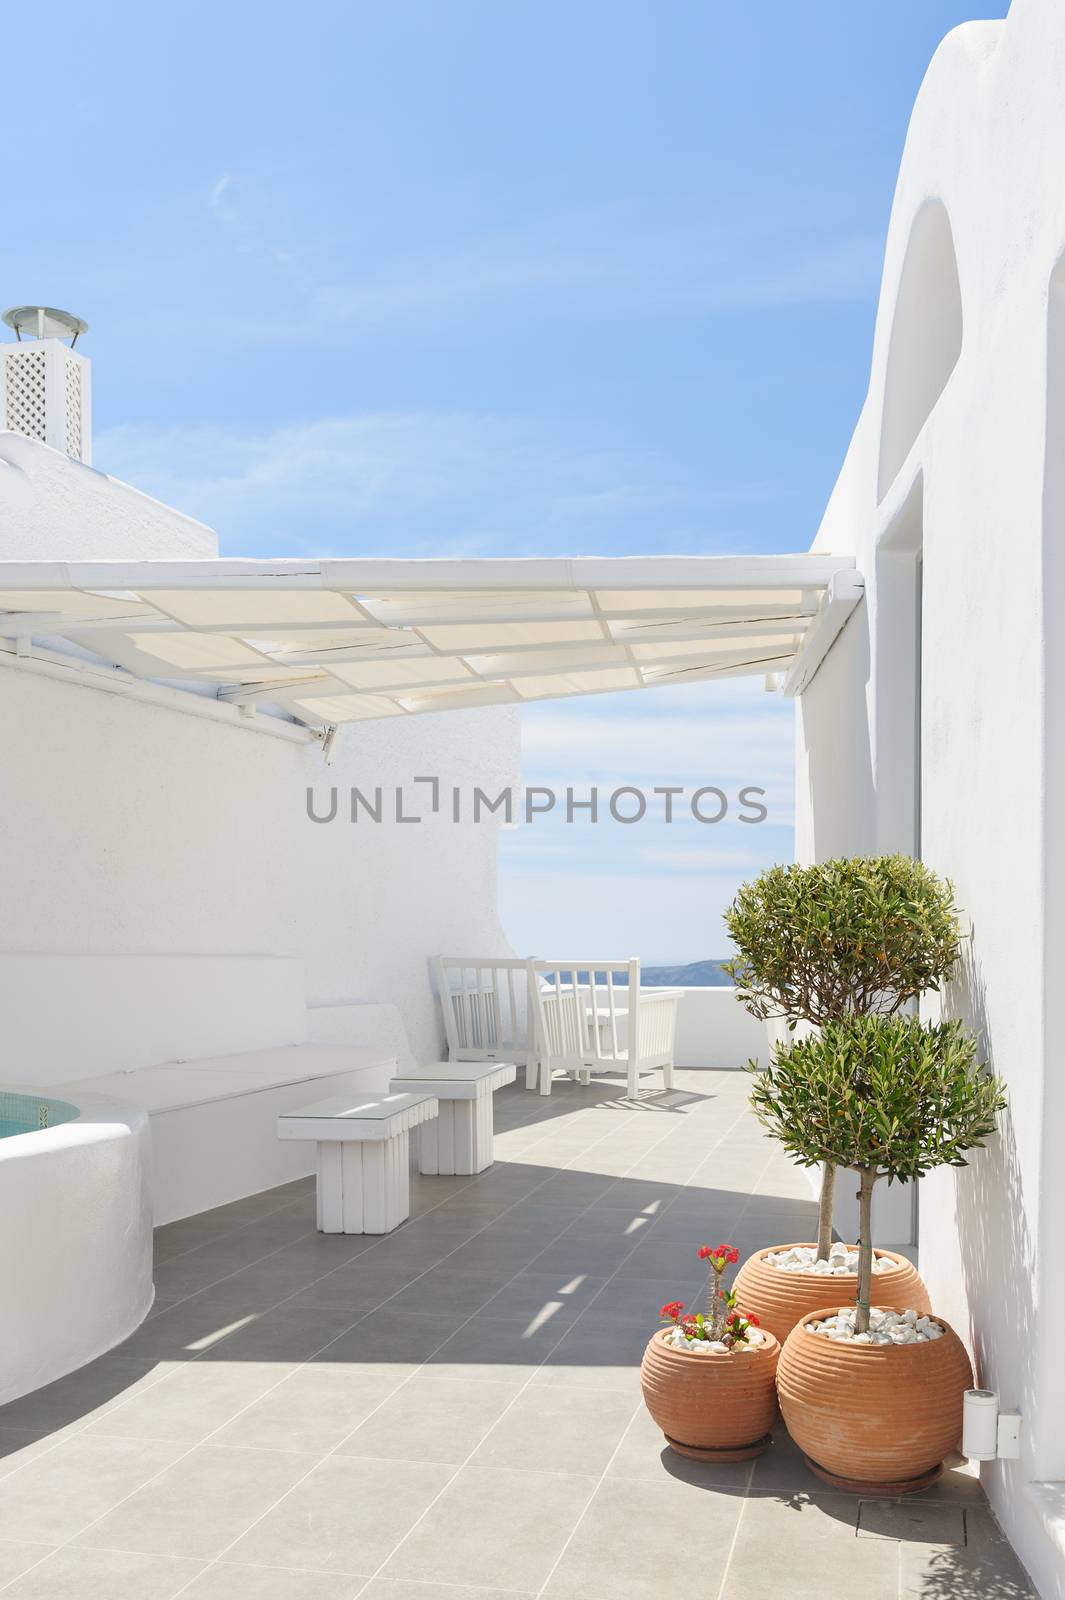 Luxury decks and patios of Oia, Santorini, Greece